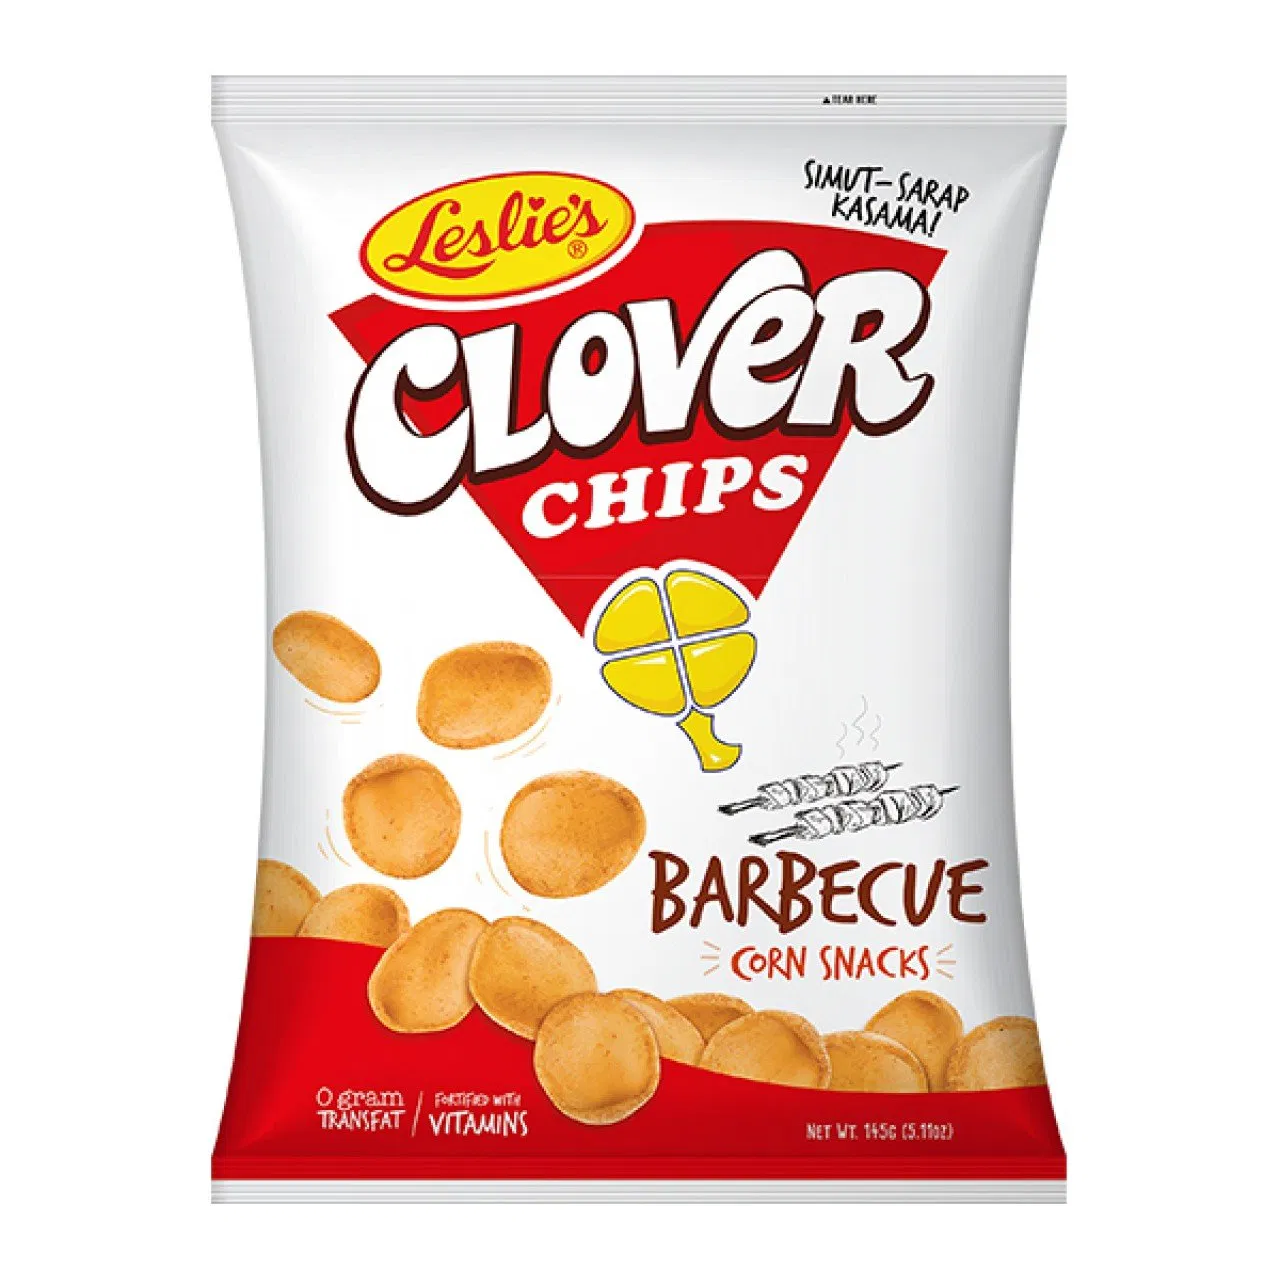 Leslies Clover chips BBQ flavor